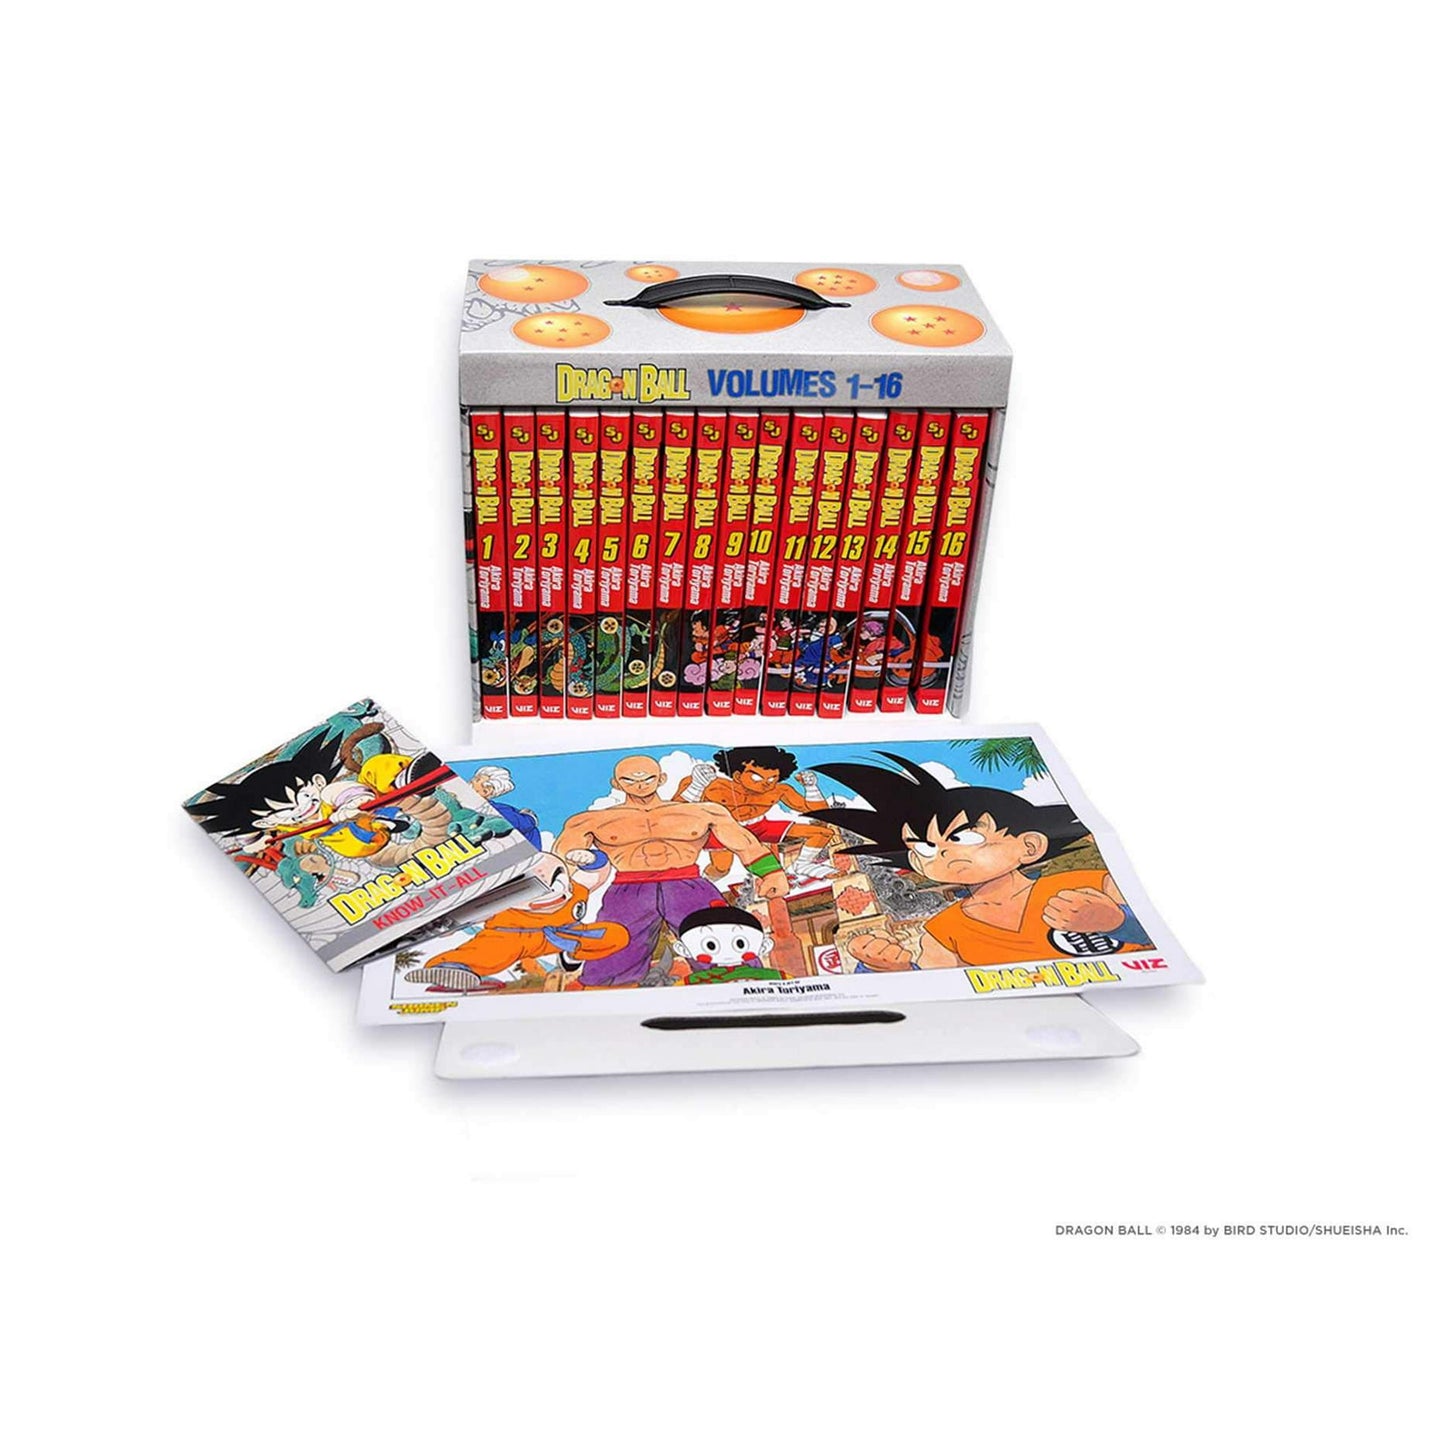 Dragon Ball Complete Box Set: Vols. 1-16